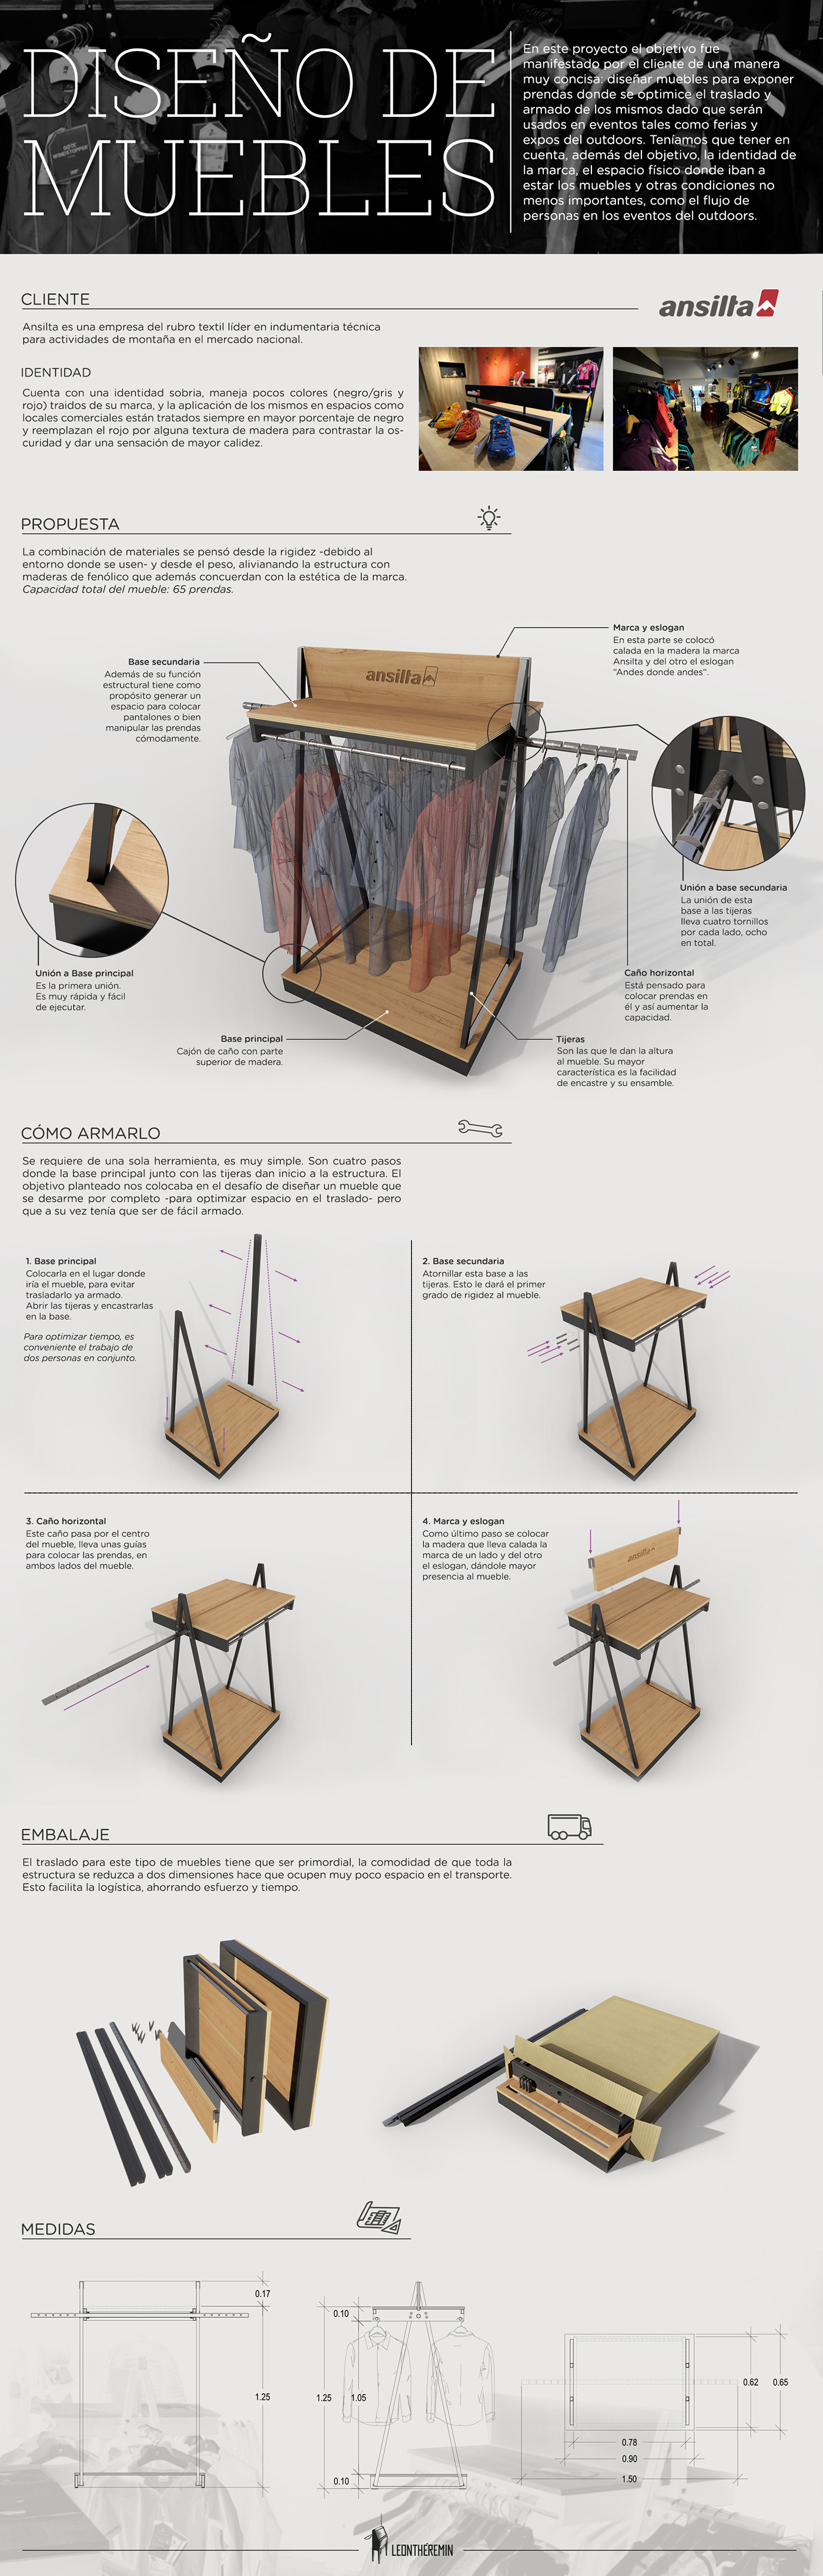 muebles Ansilta outdoors expo feria Ropa Perchero infografia